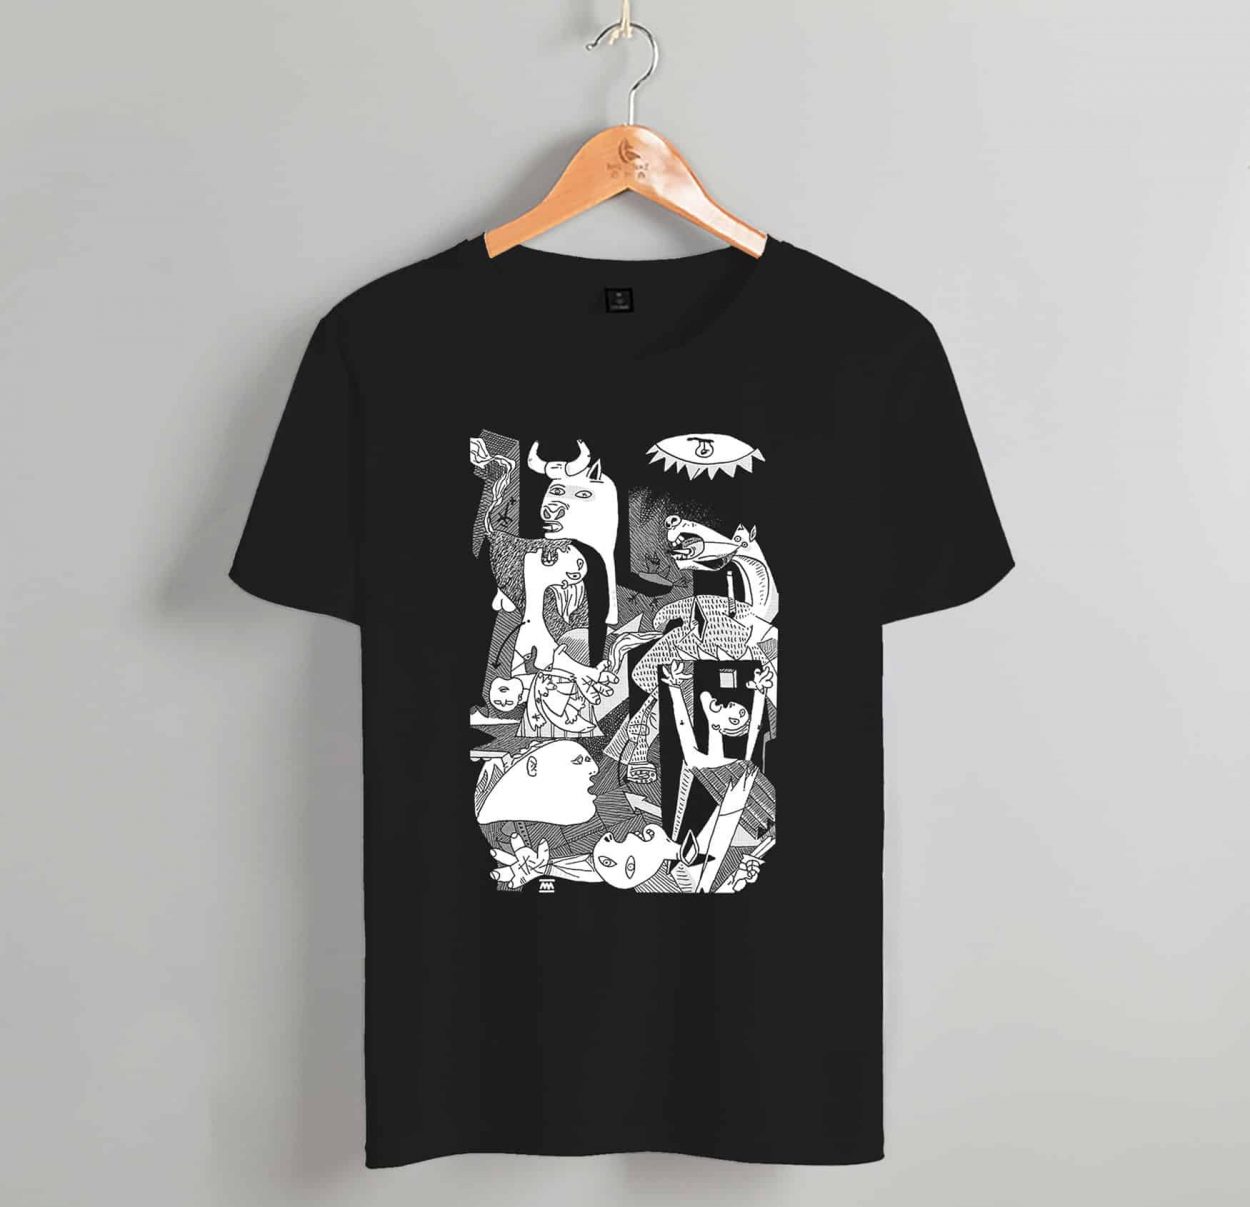 Guernica black tshirt for man made by Marroiak